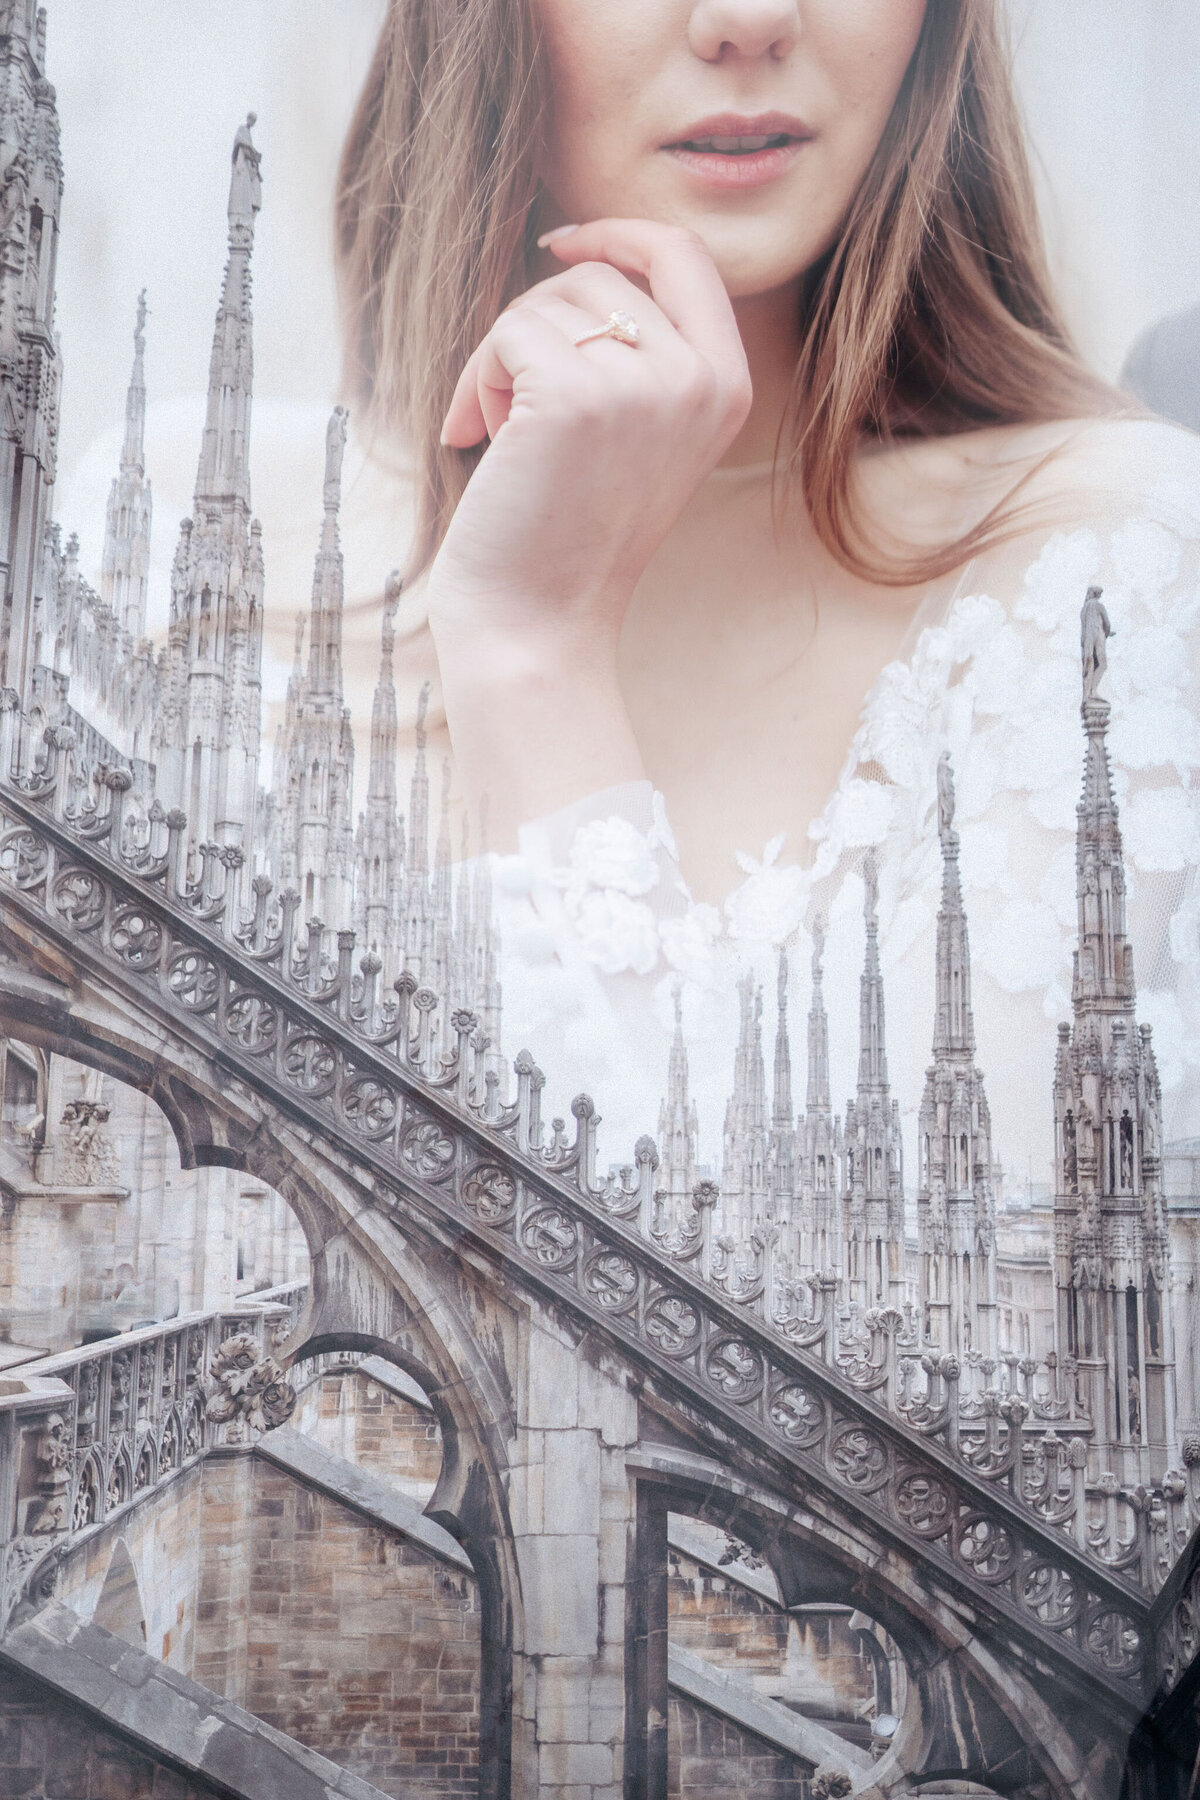 002-Milan-Duomo-Inspiration-Love-Story Elopement-Cinematic-Romance-Destination-Wedding-Editorial-Luxury-Fine-Art-Lisa-Vigliotta-Photography